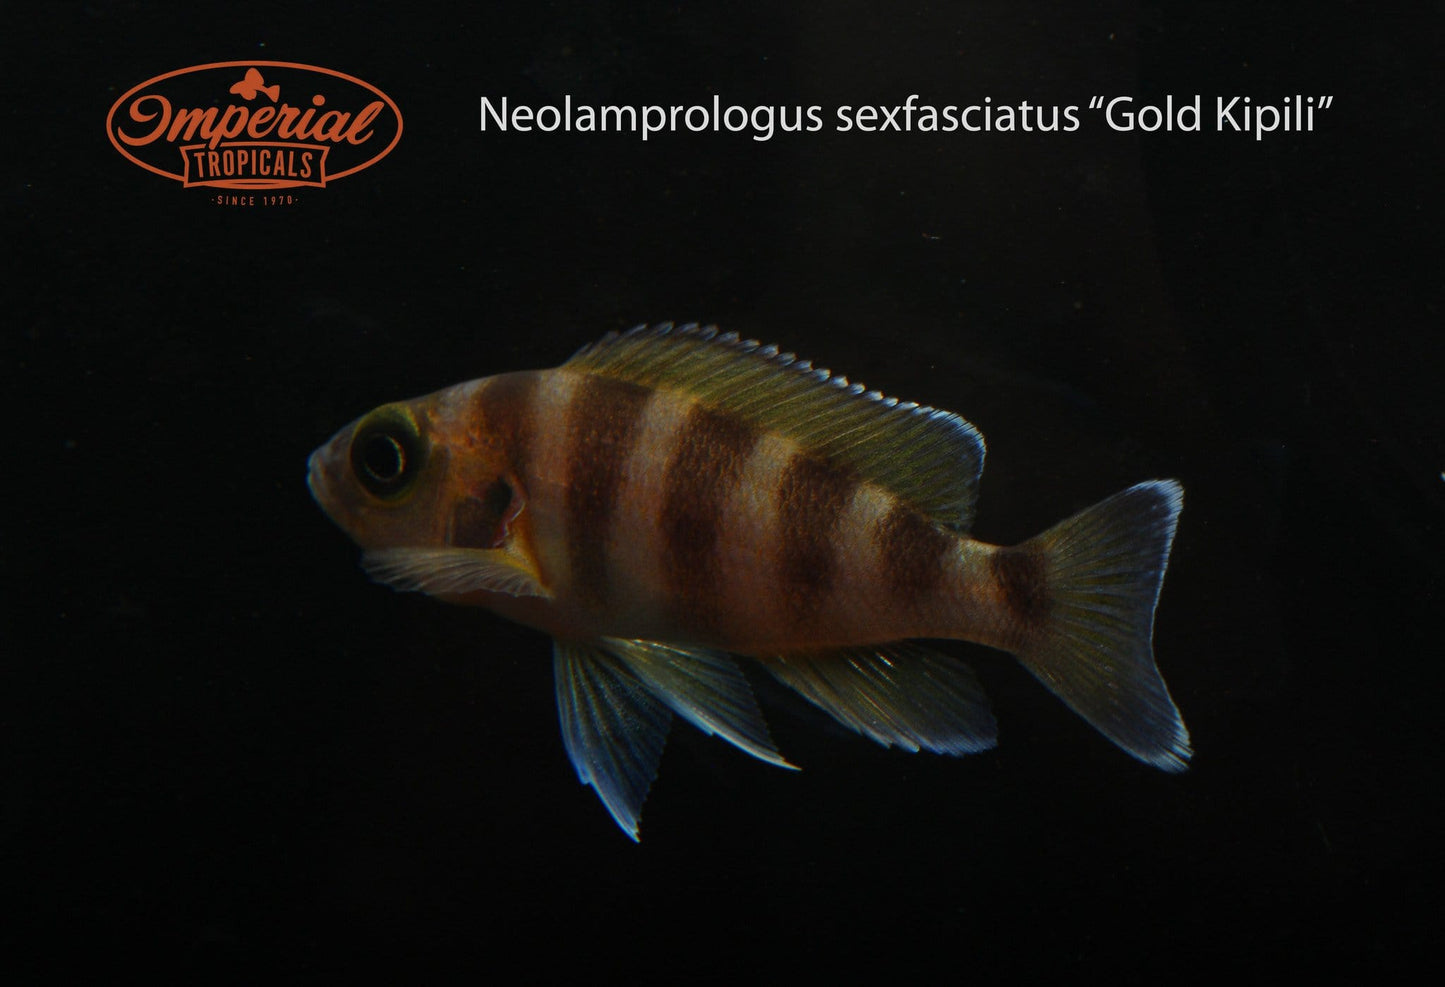 Gold Kipili (Neolamprologus sexfasciatus) - Imperial Tropicals